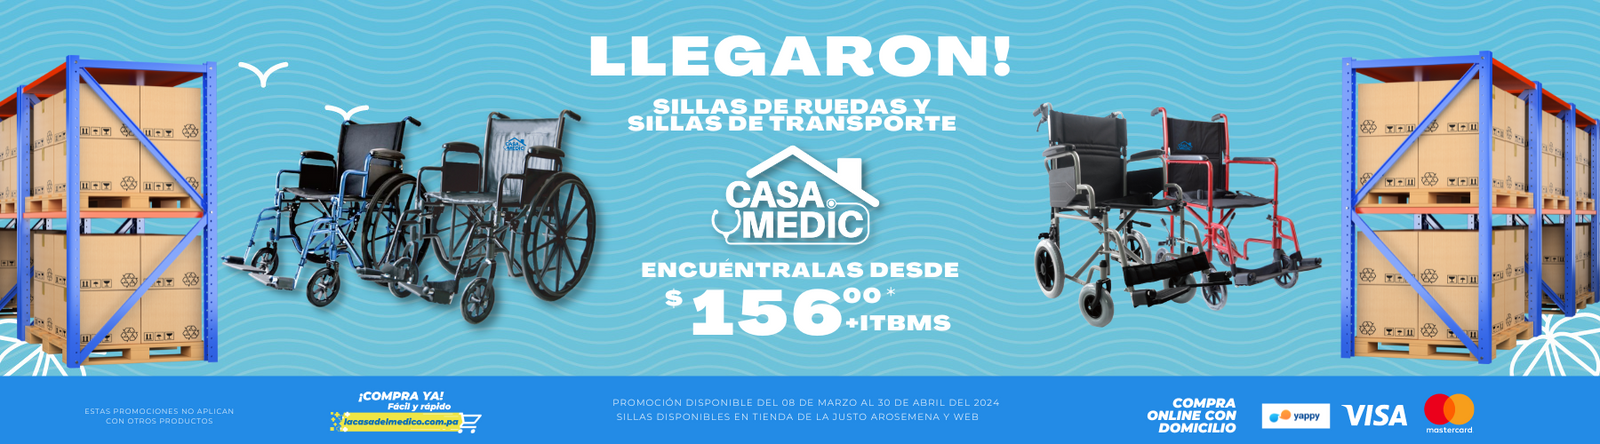 Catálogo Productos COVID - Casa Médica - Página Web by Casa Medica - Issuu